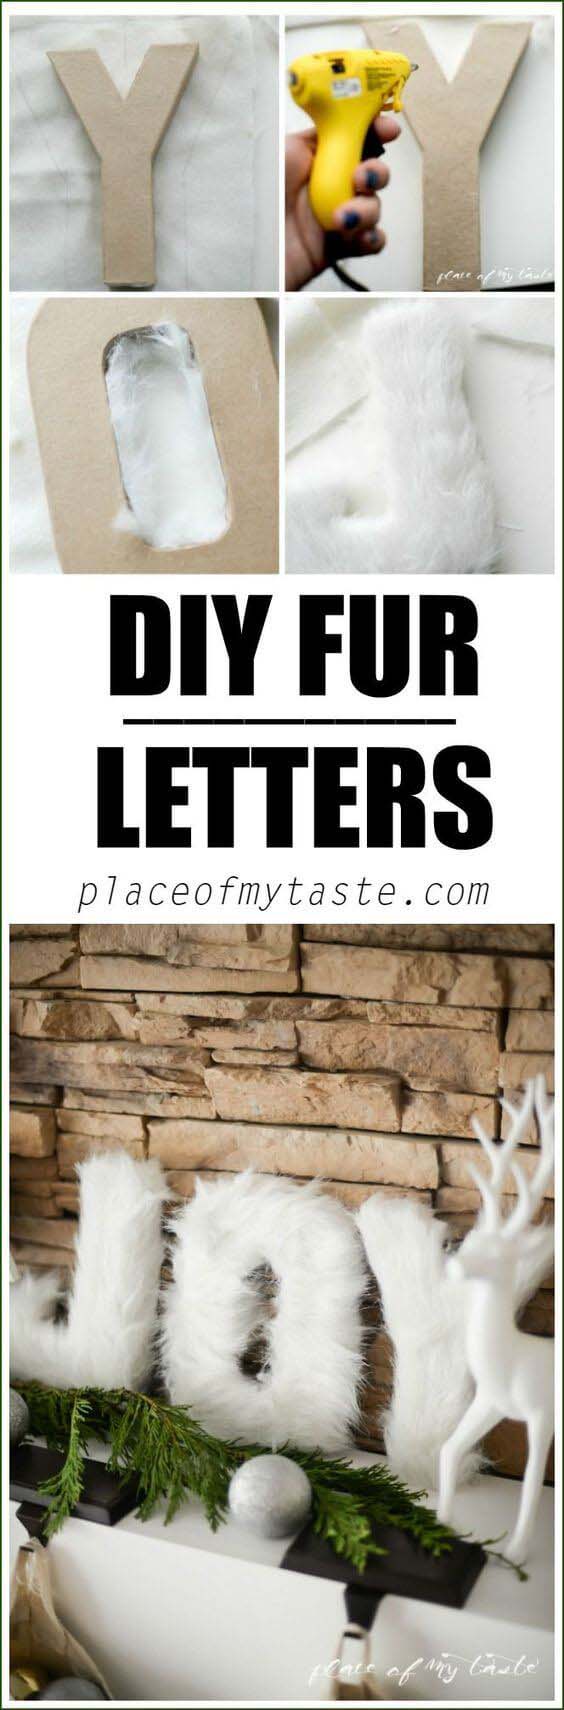 Easy Fashion-Forward Faux Fur Letters #Christmas #crafts #decorations #decorhomeideas